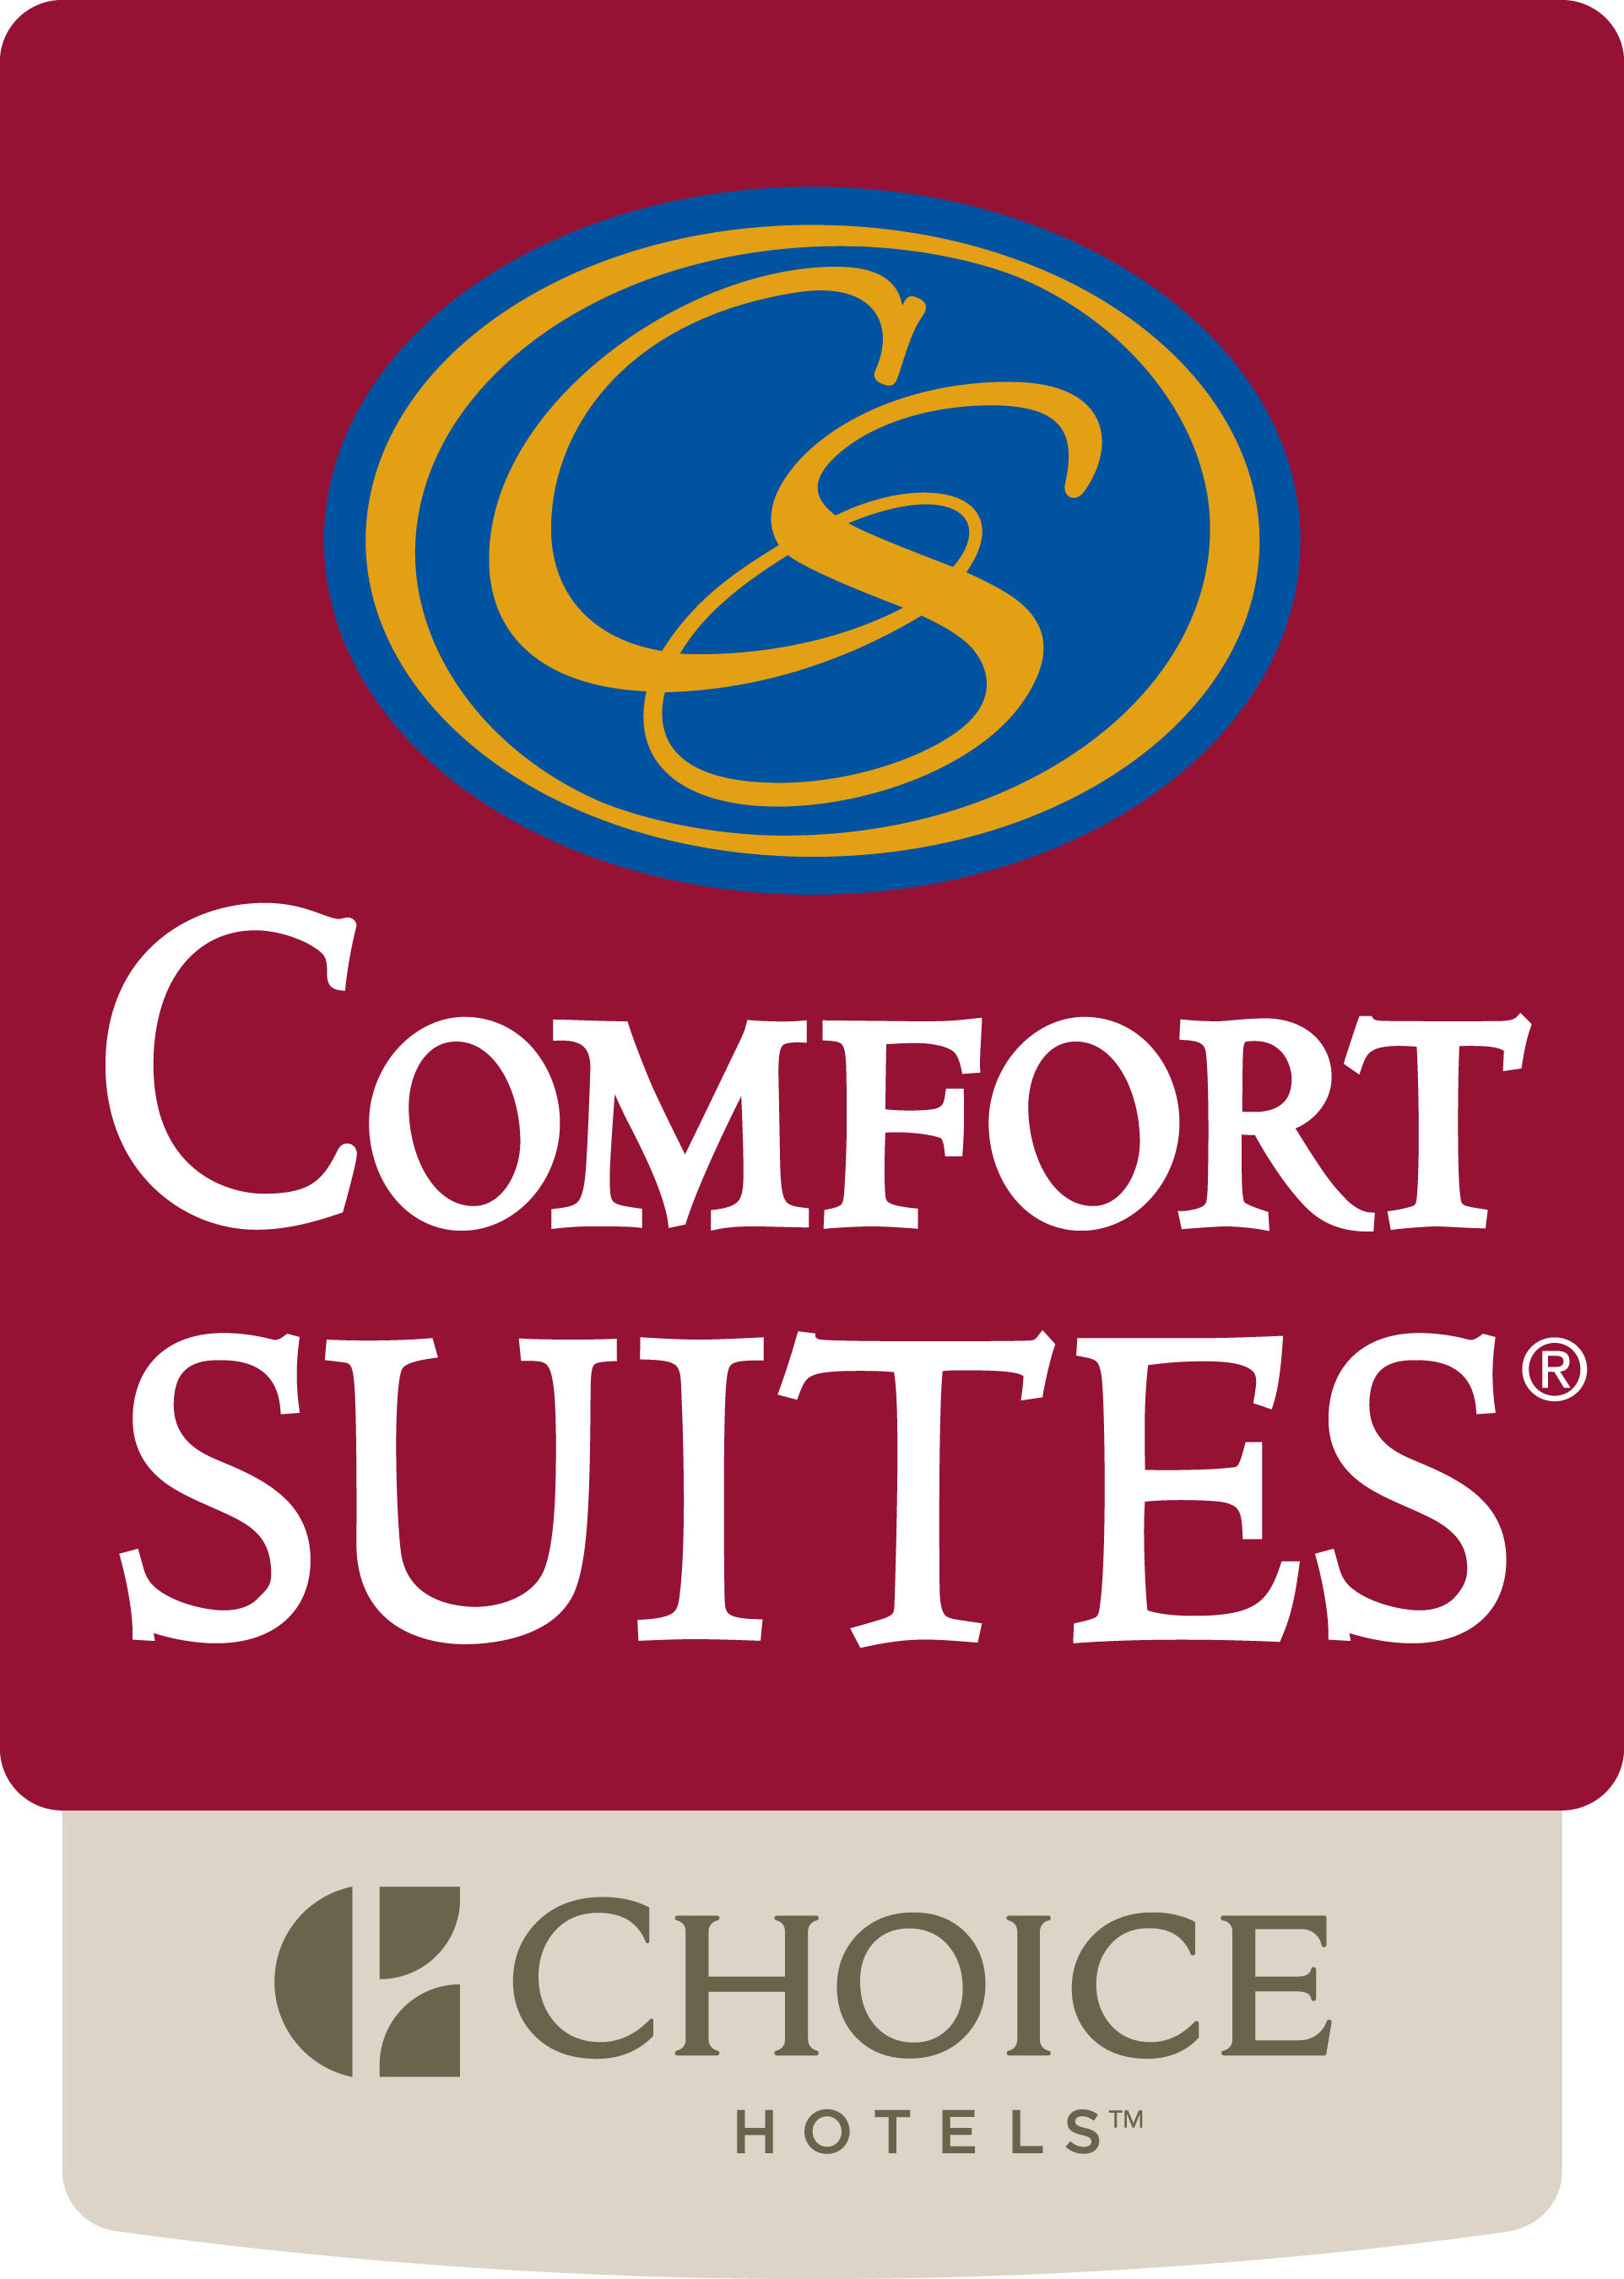 Comfort Suites. (PRNewsFoto/Choice Hotels International) (PRNewsFoto/CHOICE HOTELS INTERNATIONAL)